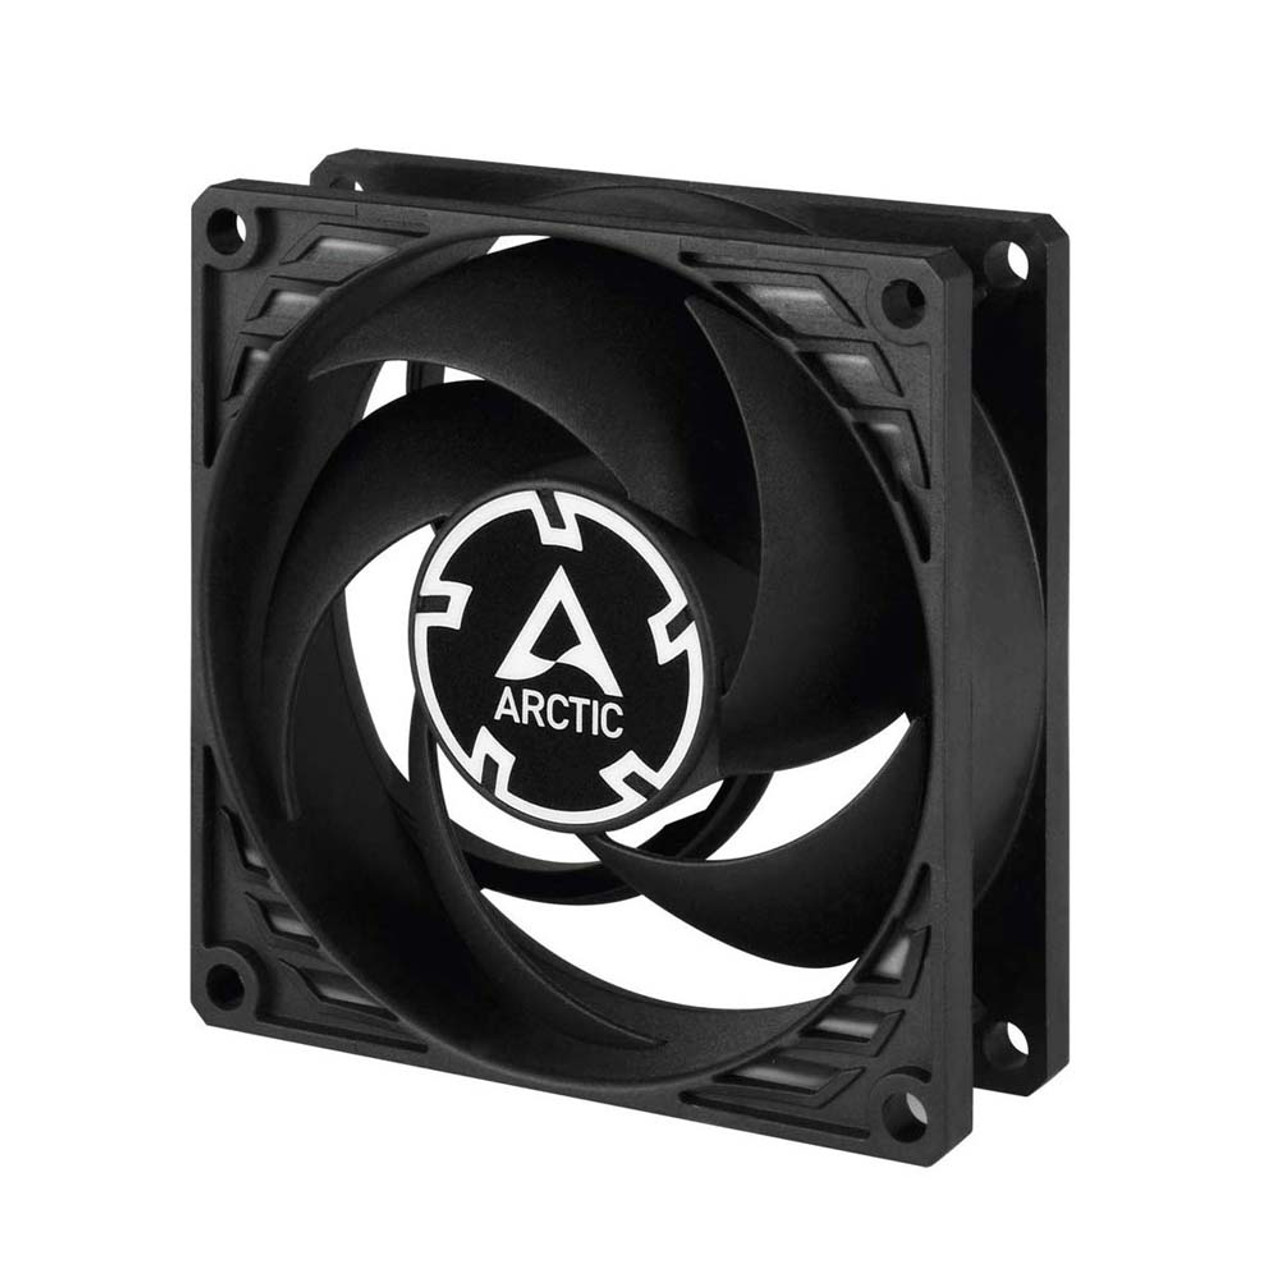 Arctic ACFAN00151A P8 PWM PST CO 80mm Case Fan Black